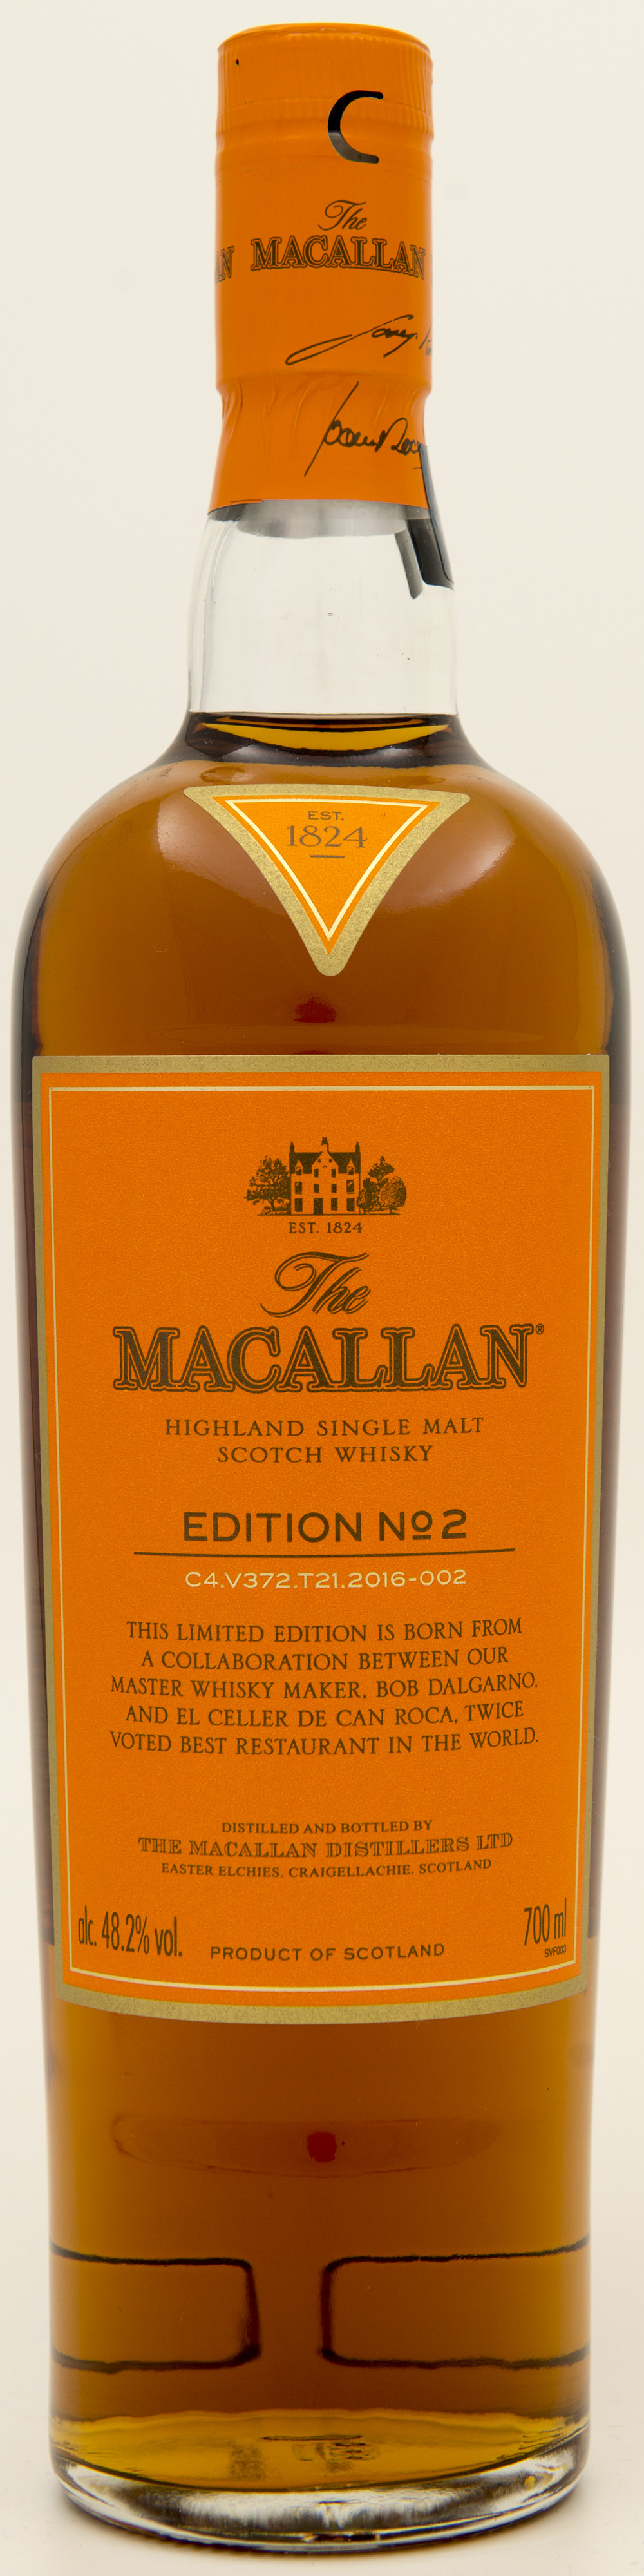 Billede: DSC_1389 - MacAllan Edition No 2 - bottle front.jpg